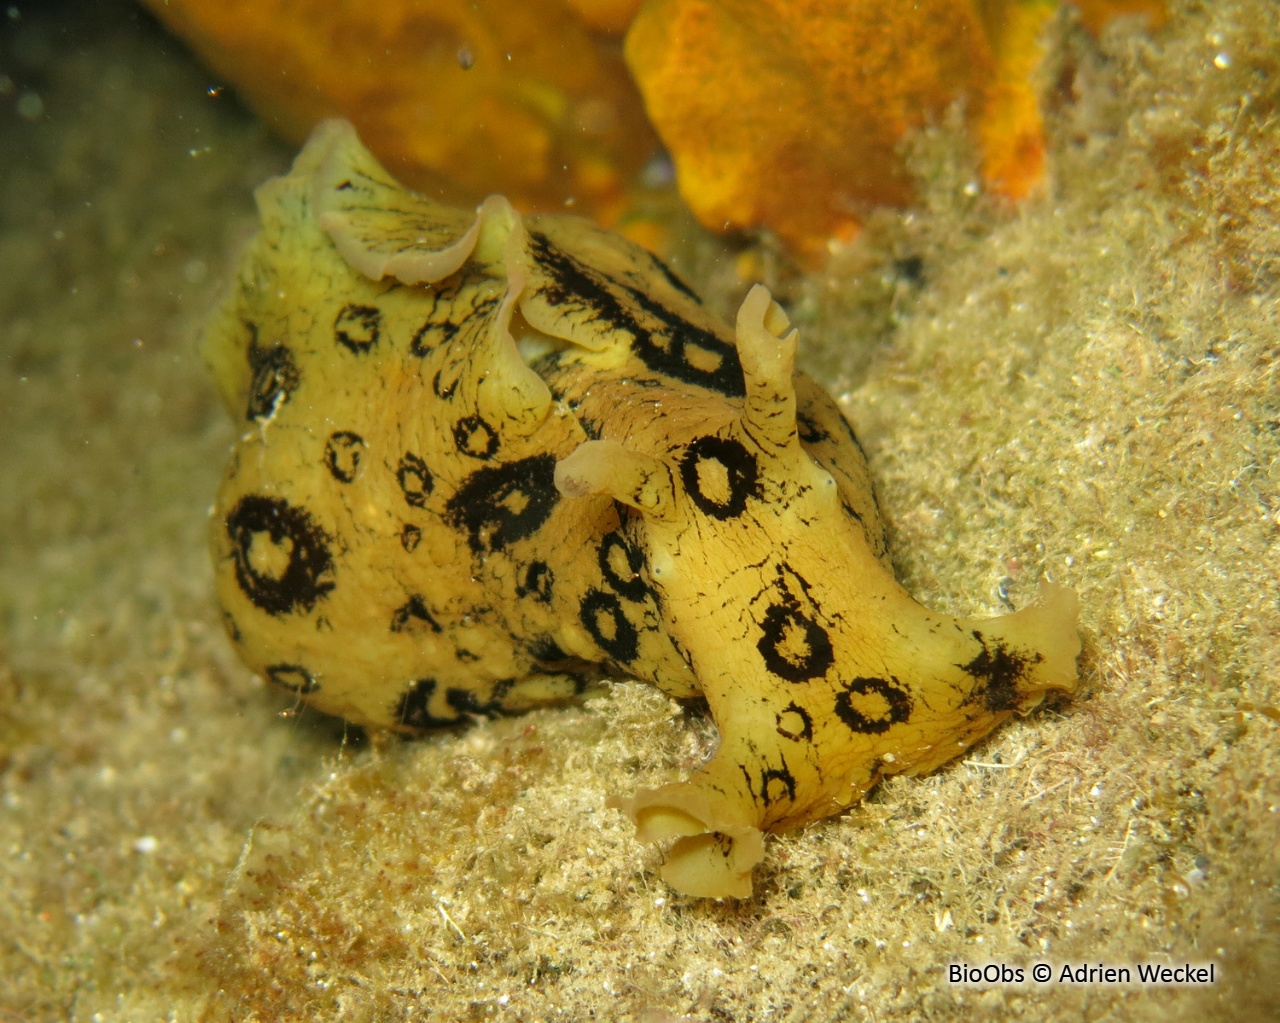 Lièvre de mer ocellé - Aplysia dactylomela - Adrien Weckel - BioObs